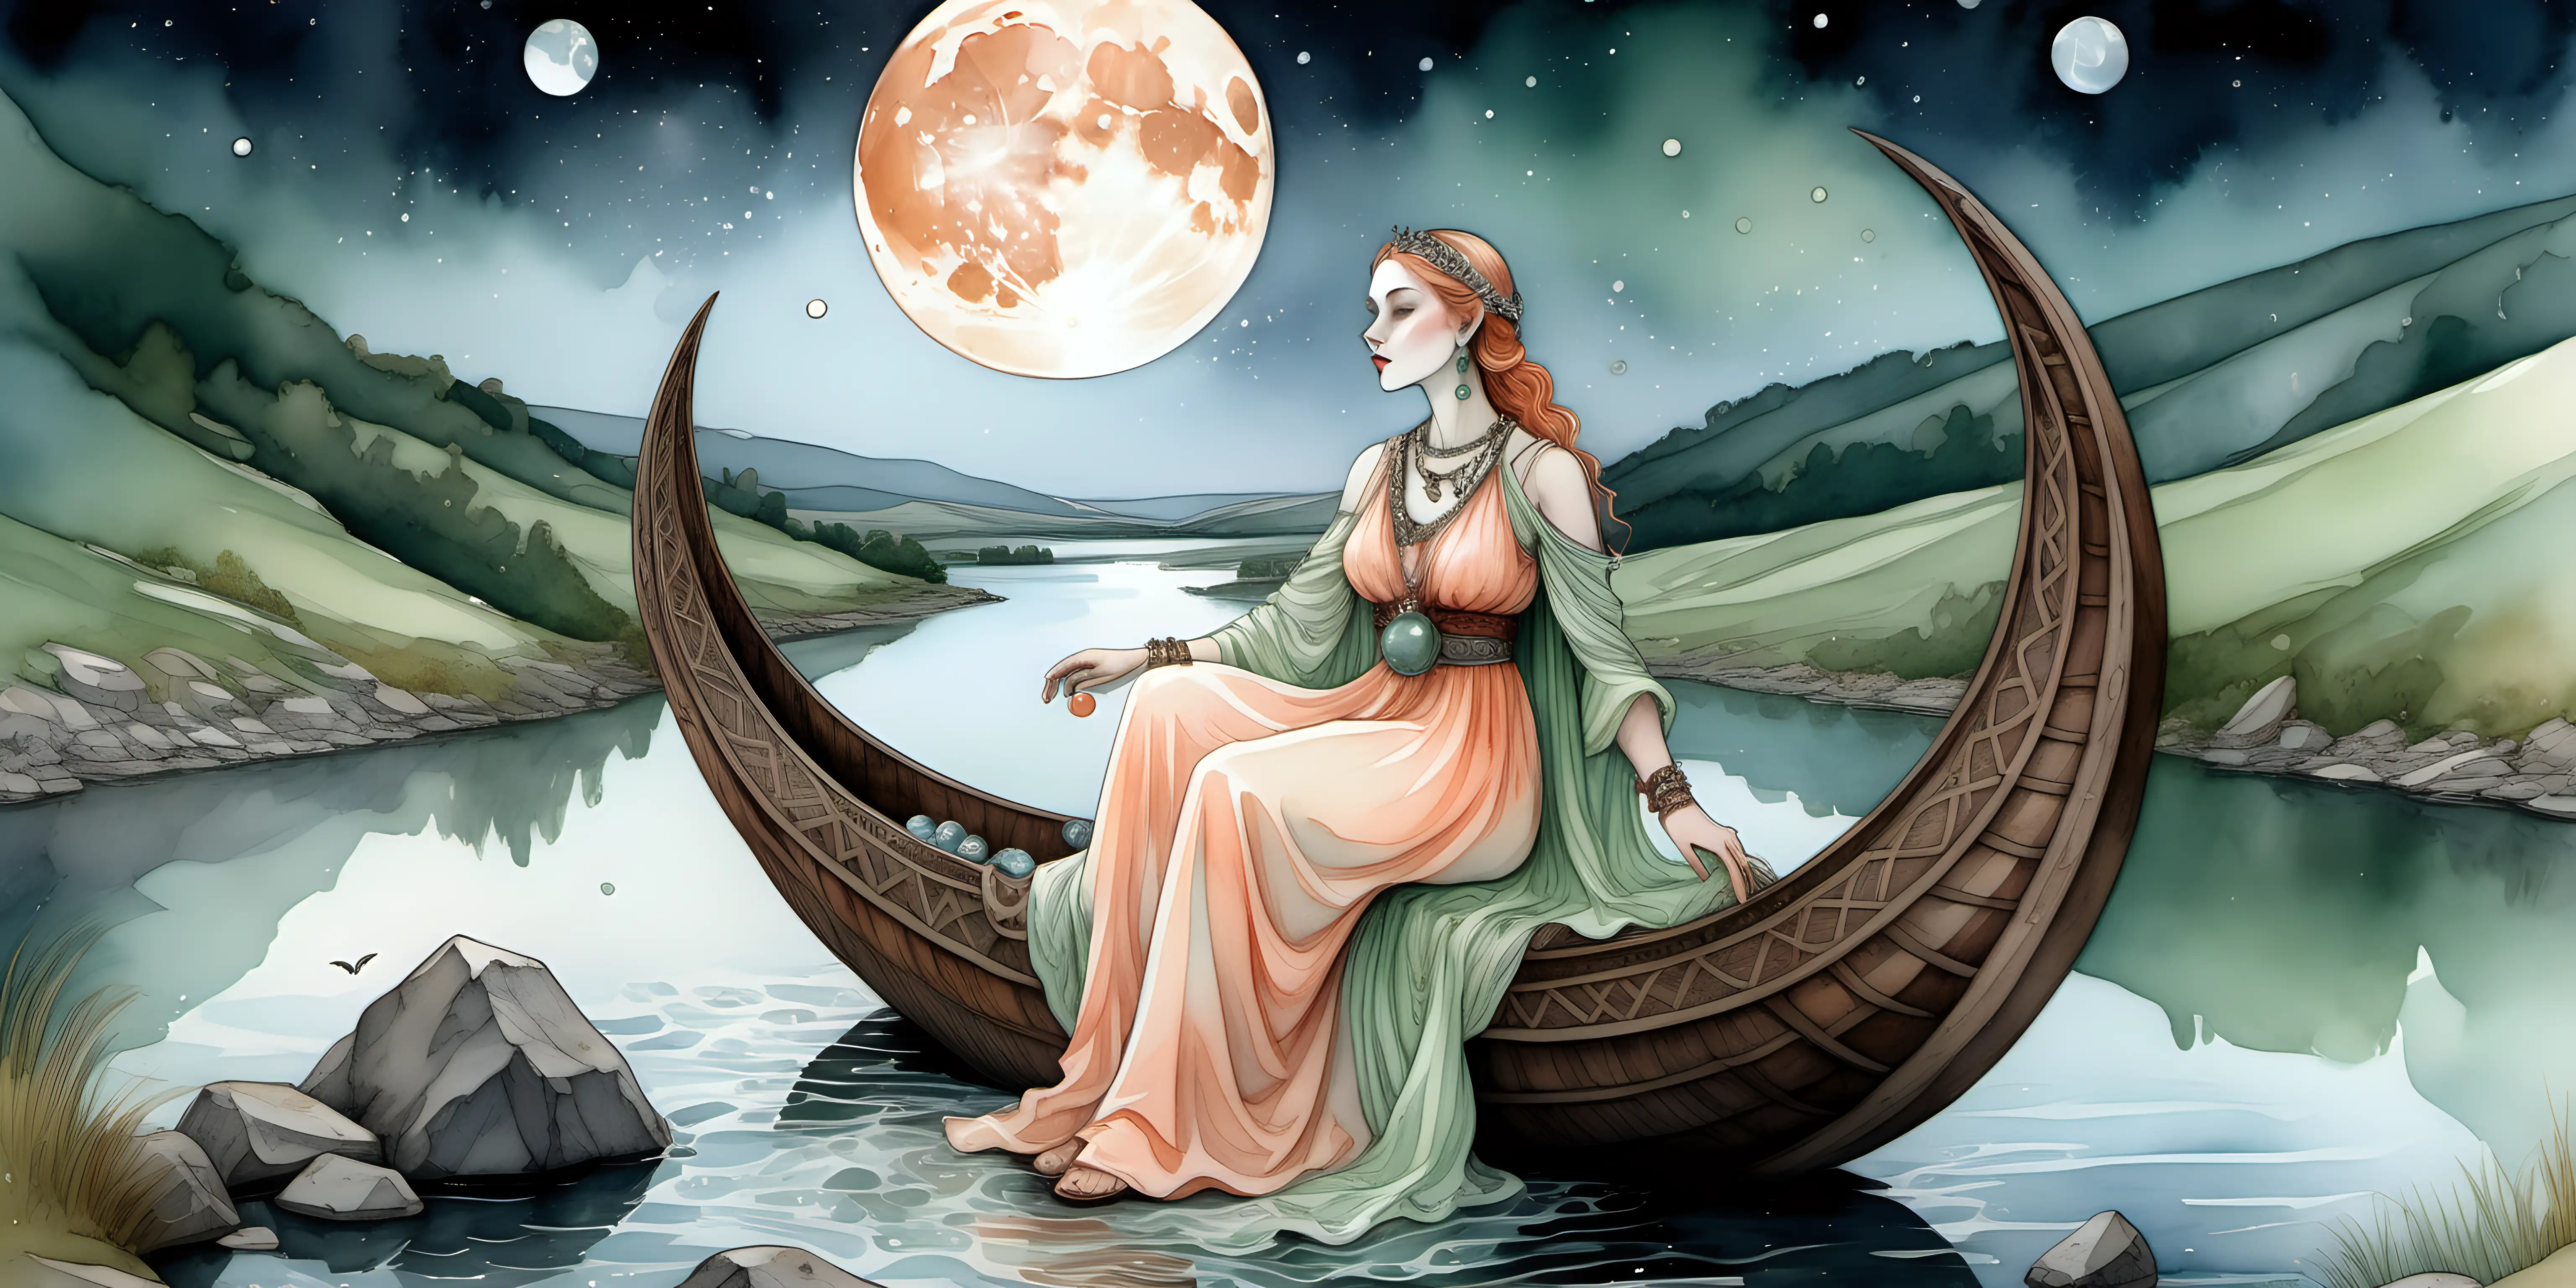 Enchanting Lady of the Lake in Viking Ship under Moonlight